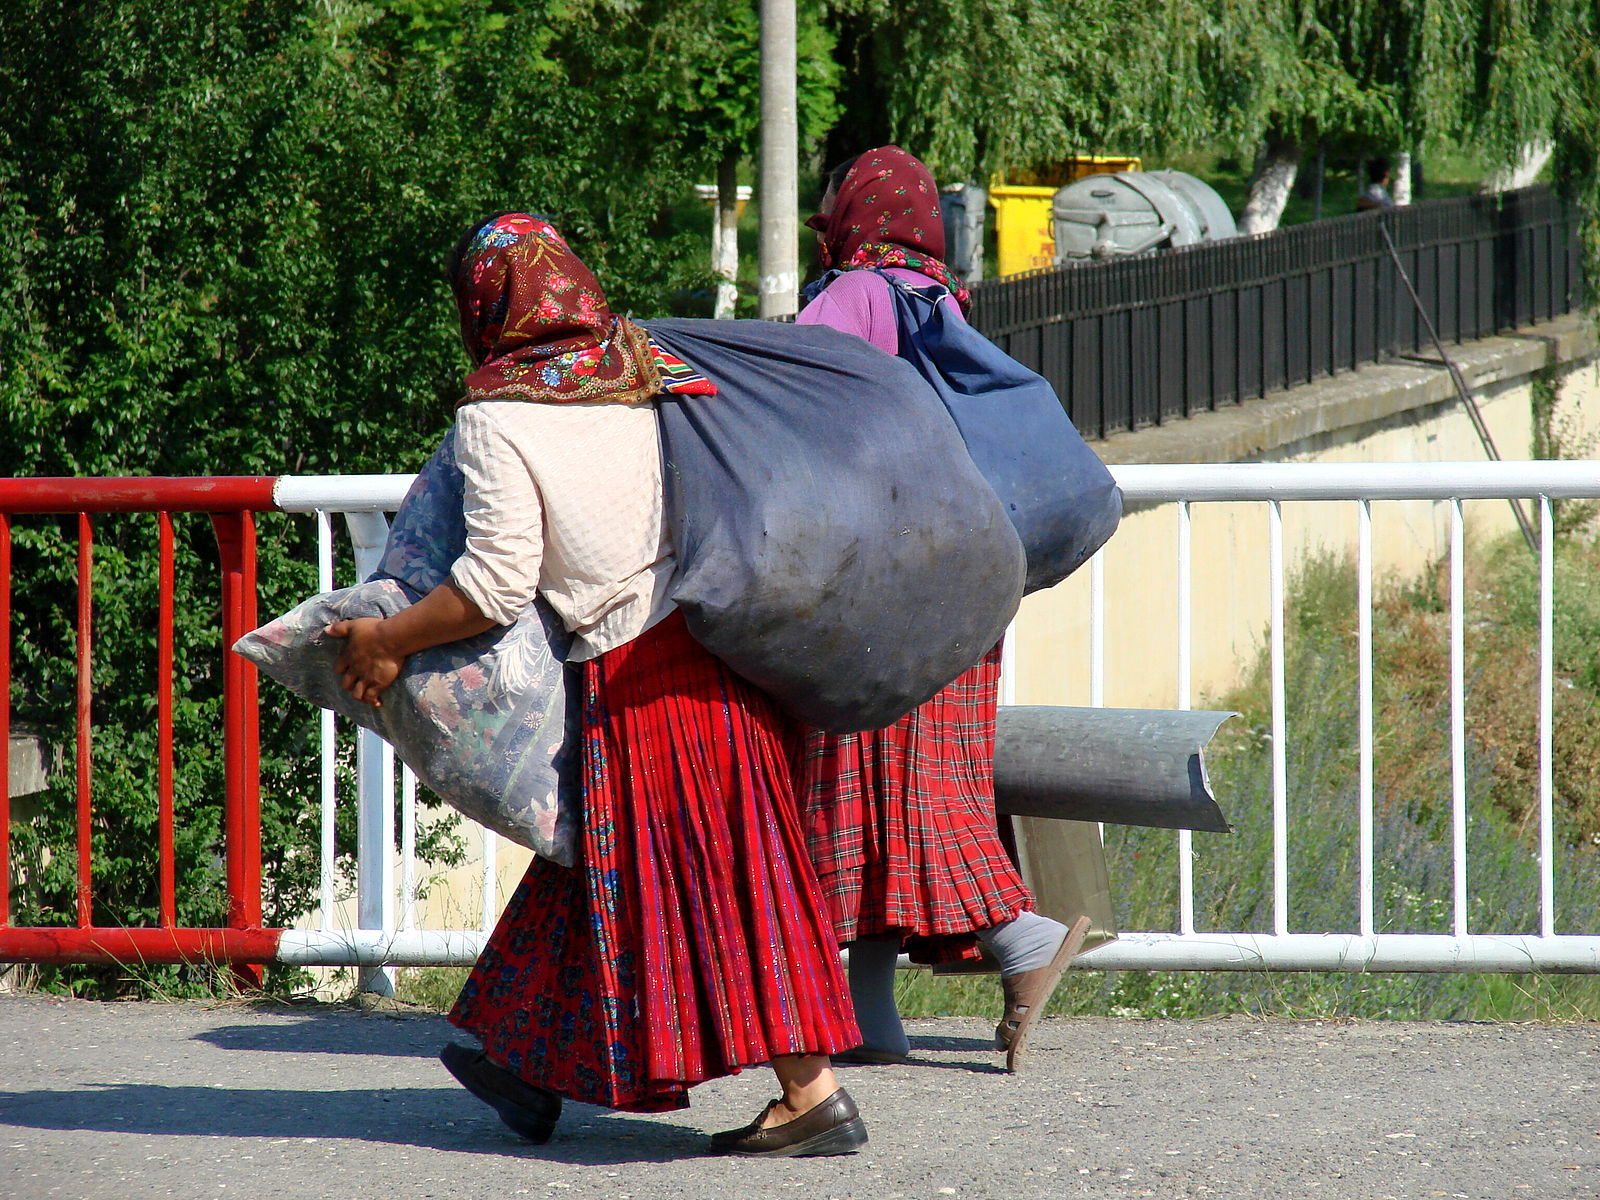 2 Roma women carrying bags